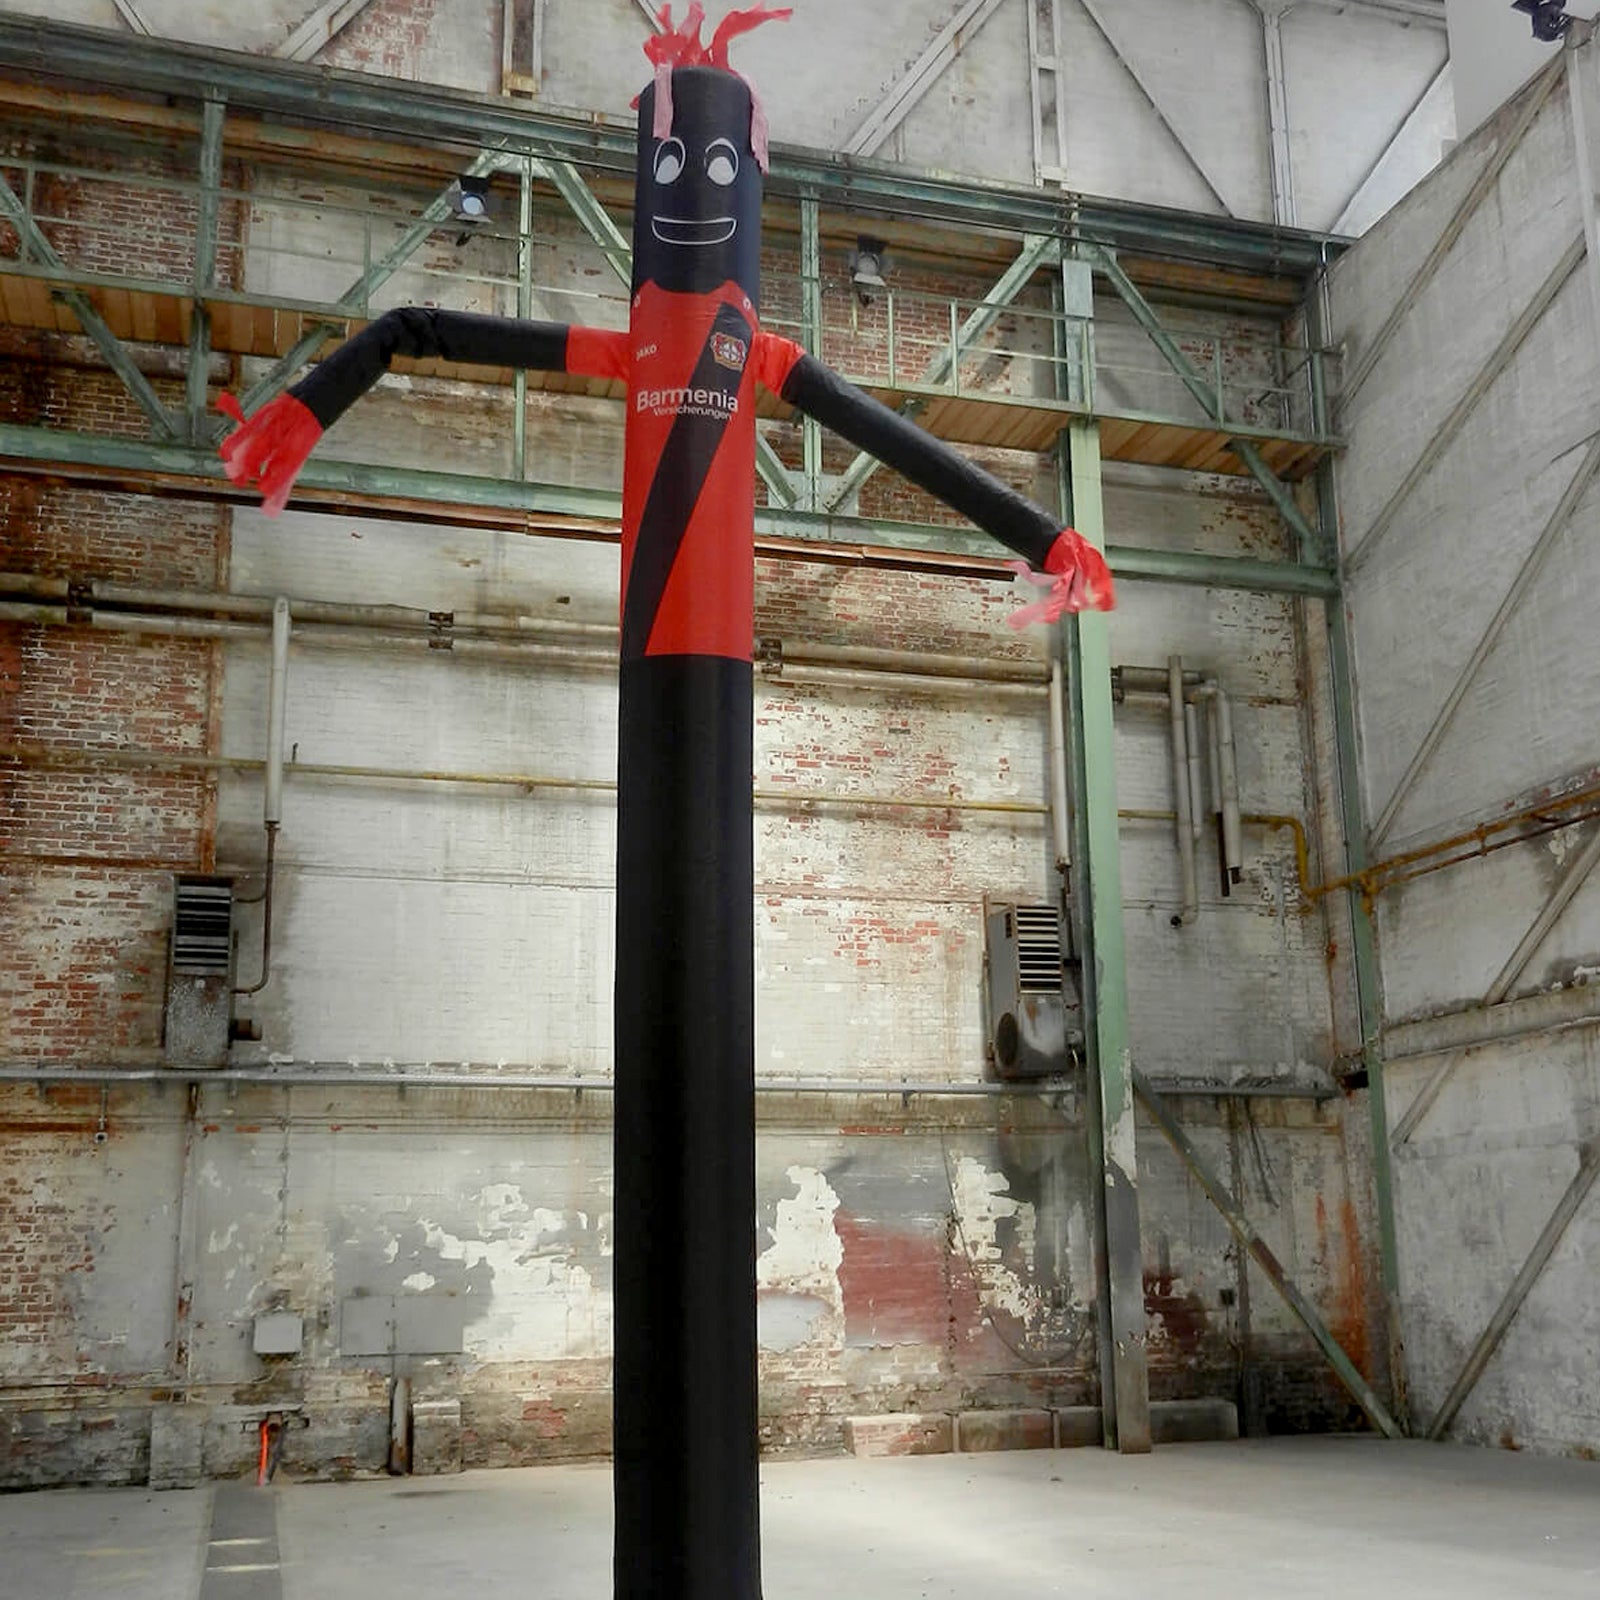 Waving Sky dancers 100% digitally printed - by Inflatable24